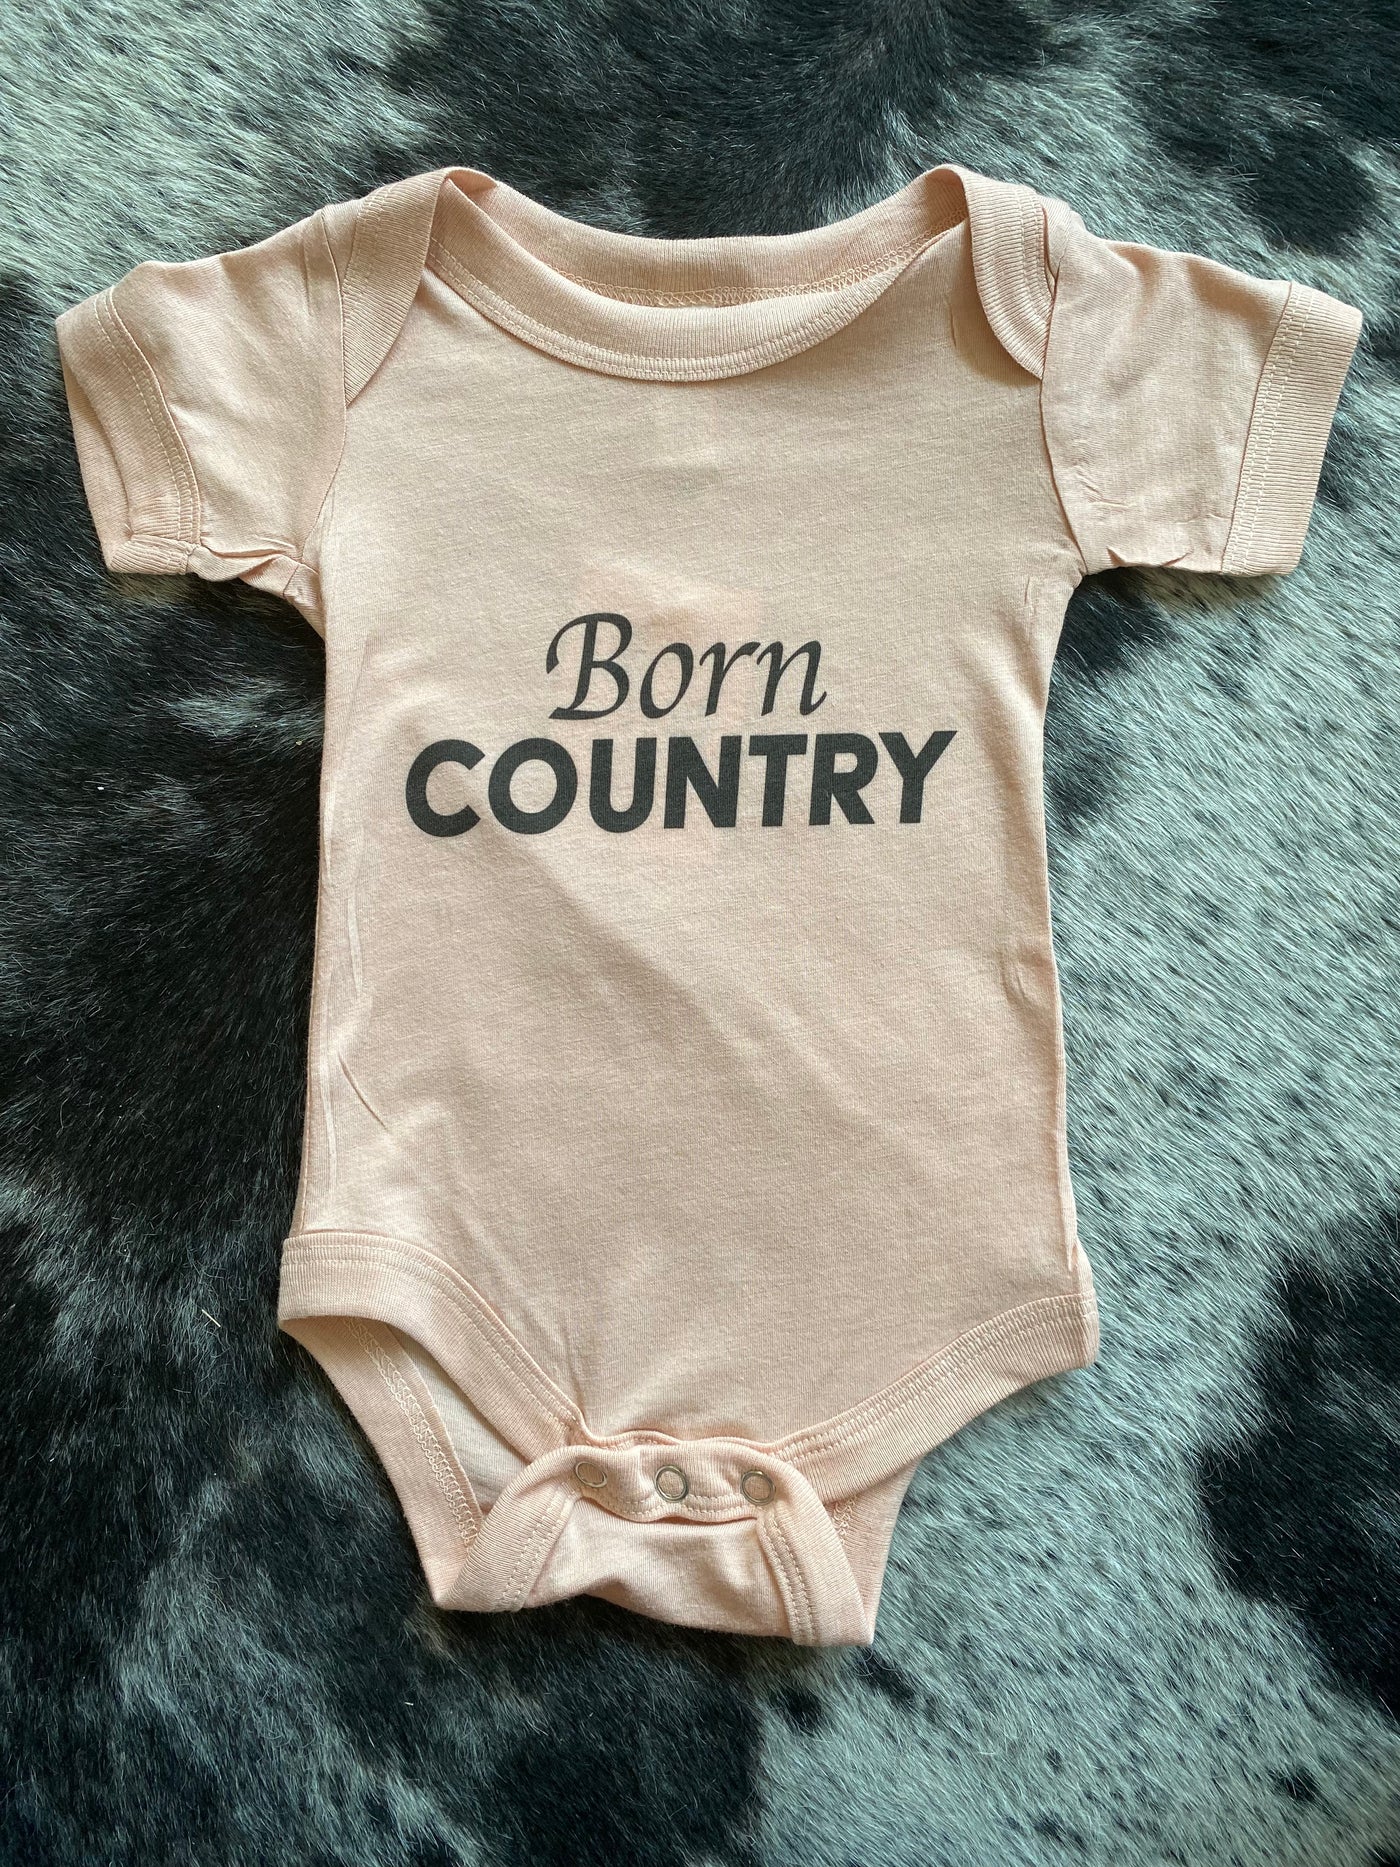 Born Country Baby Onesie